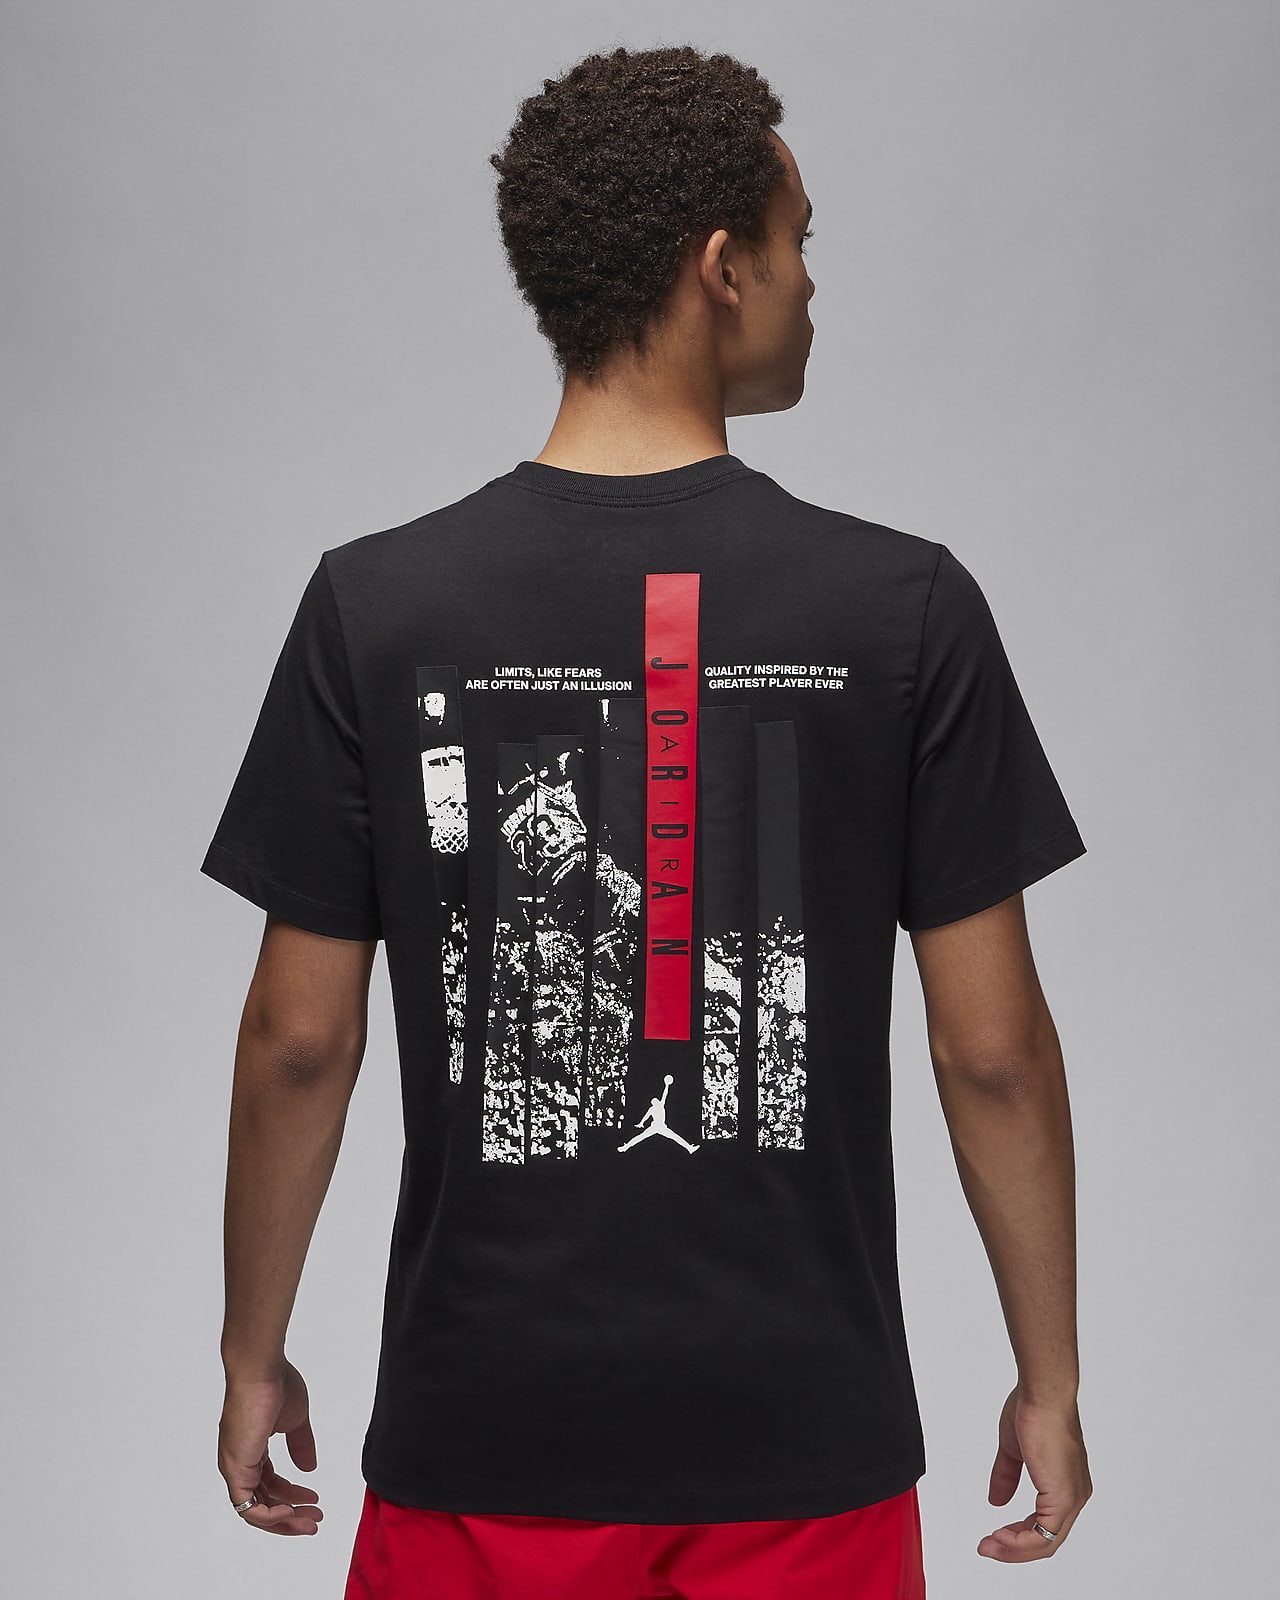 Jordan Brand Men's Graphic T-Shirt.